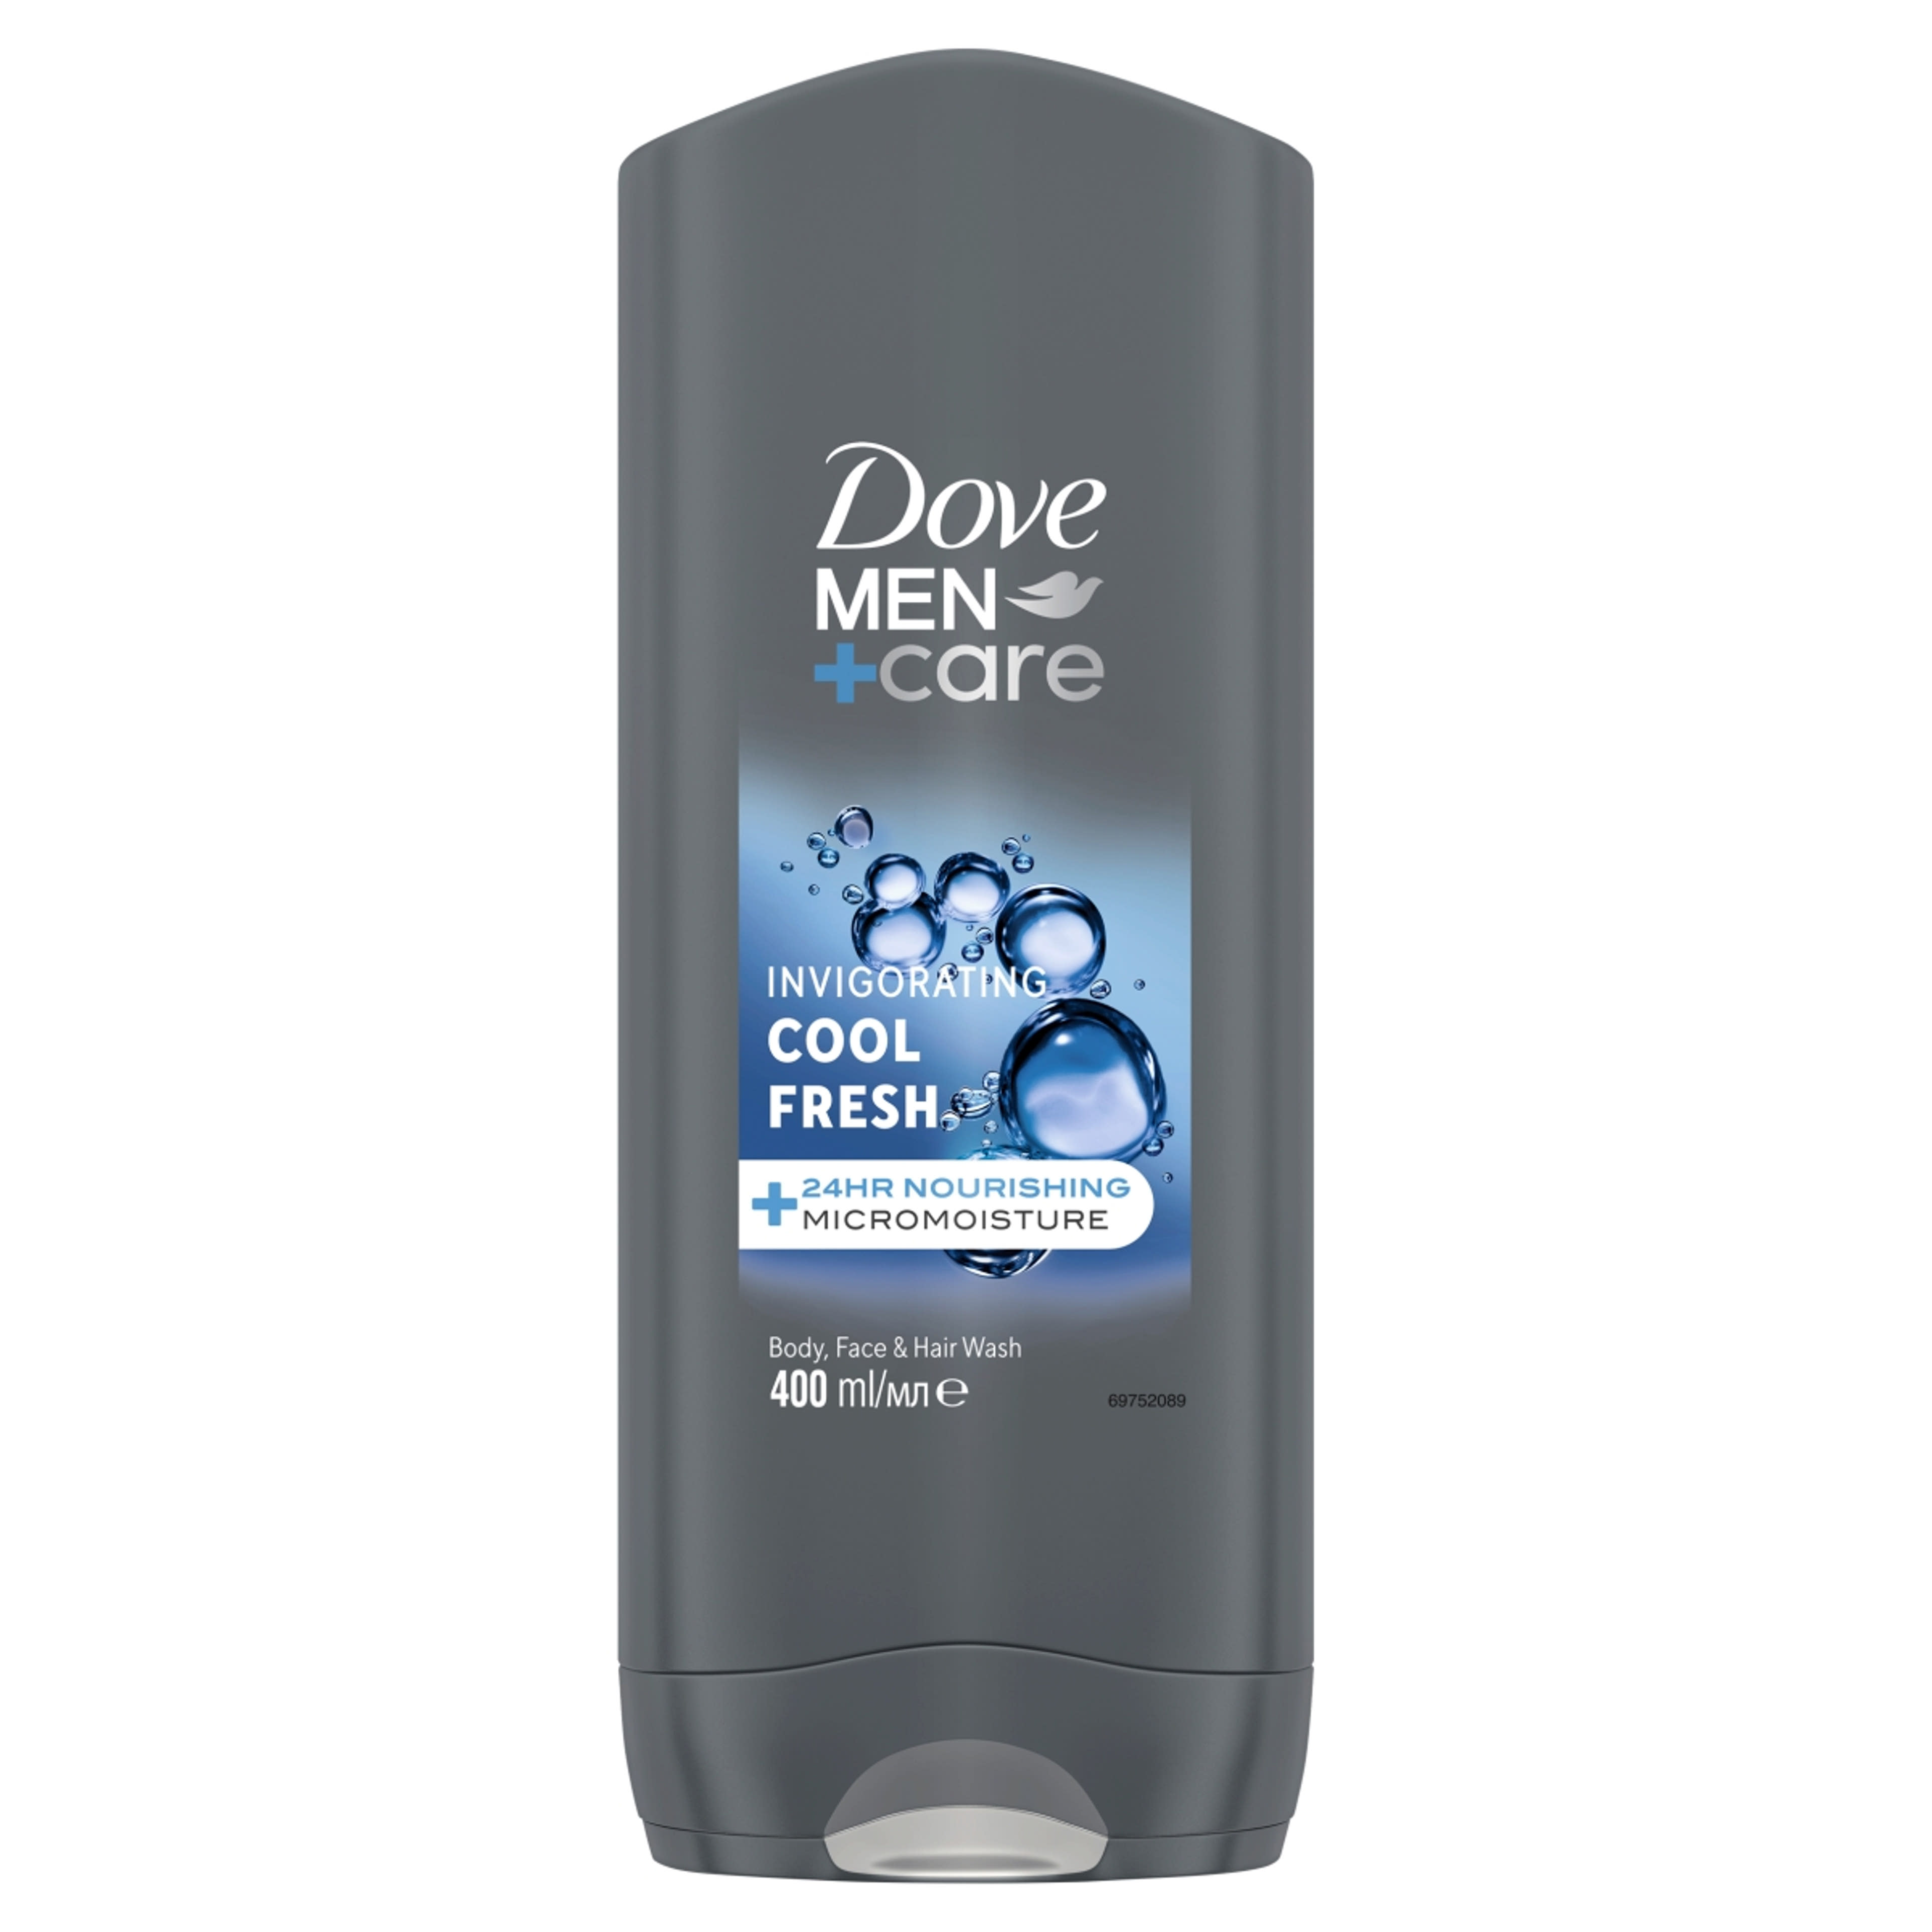 Dove Men+Care Invigorating Cool Fresh tusfürdő testre, arcra, hajra - 400 ml-1